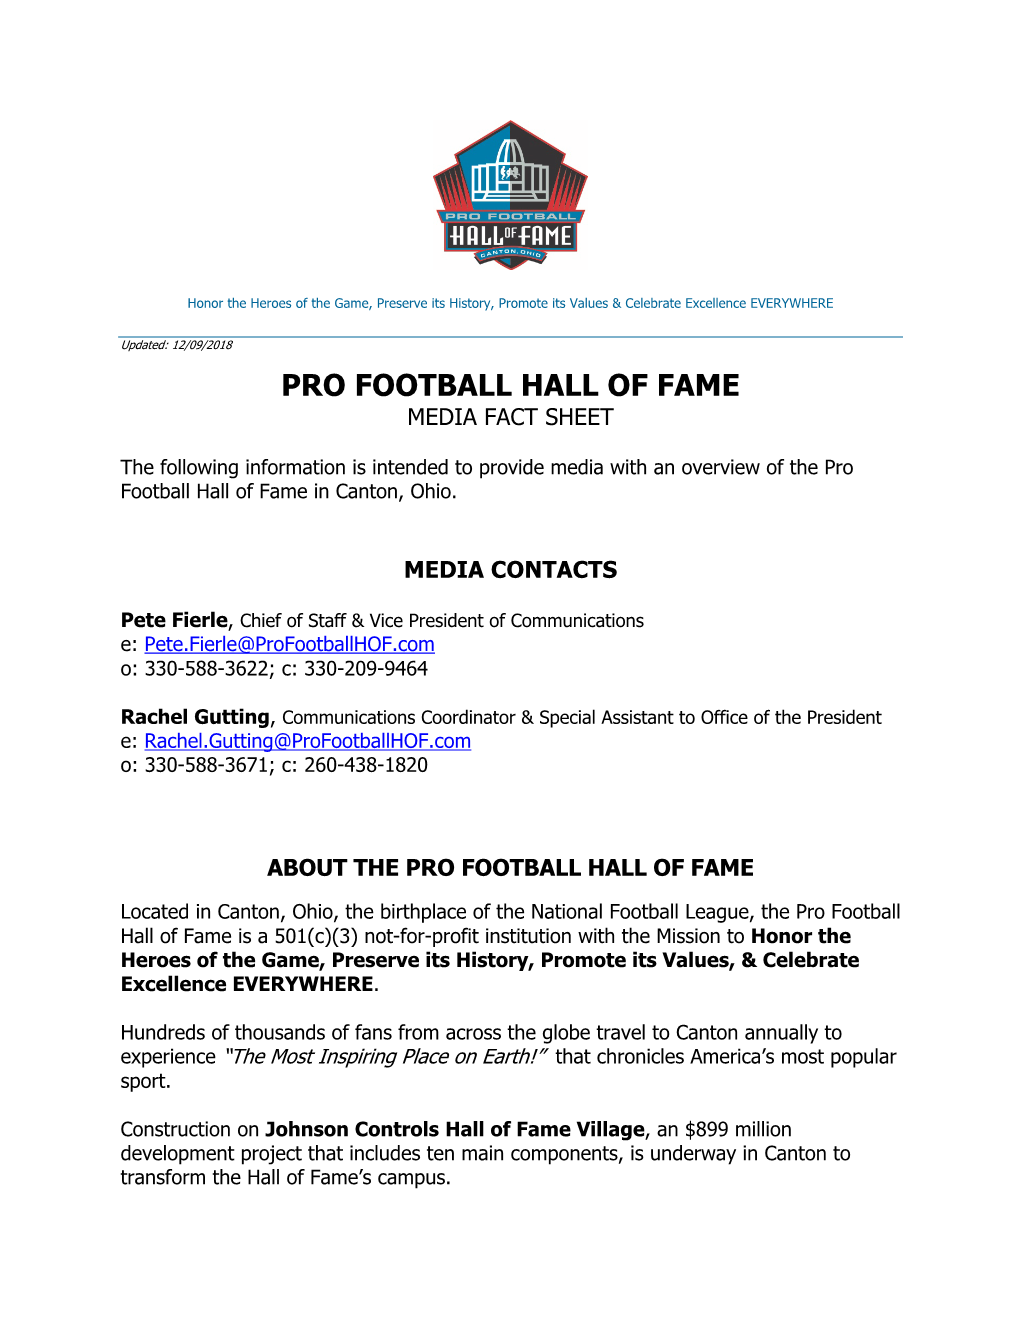 Pro Football Hall of Fame Media Fact Sheet